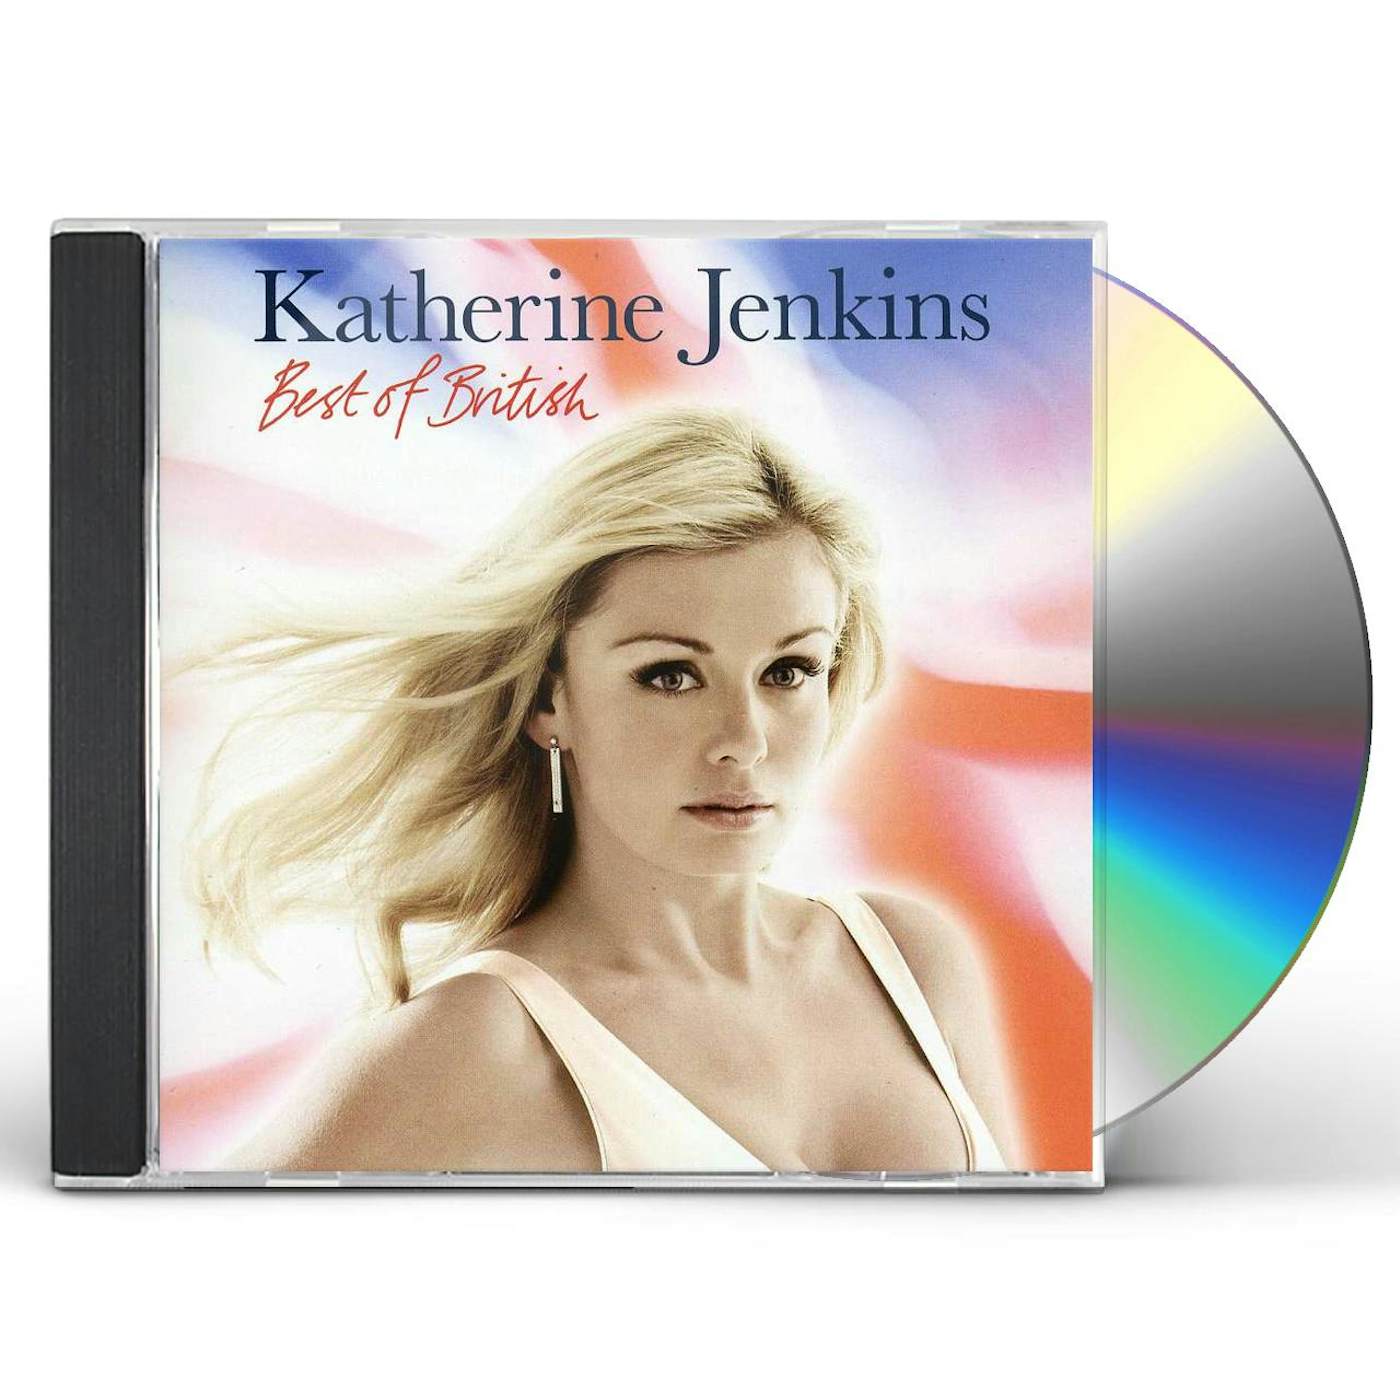 Katherine Jenkins BEST OF BRITISH CD